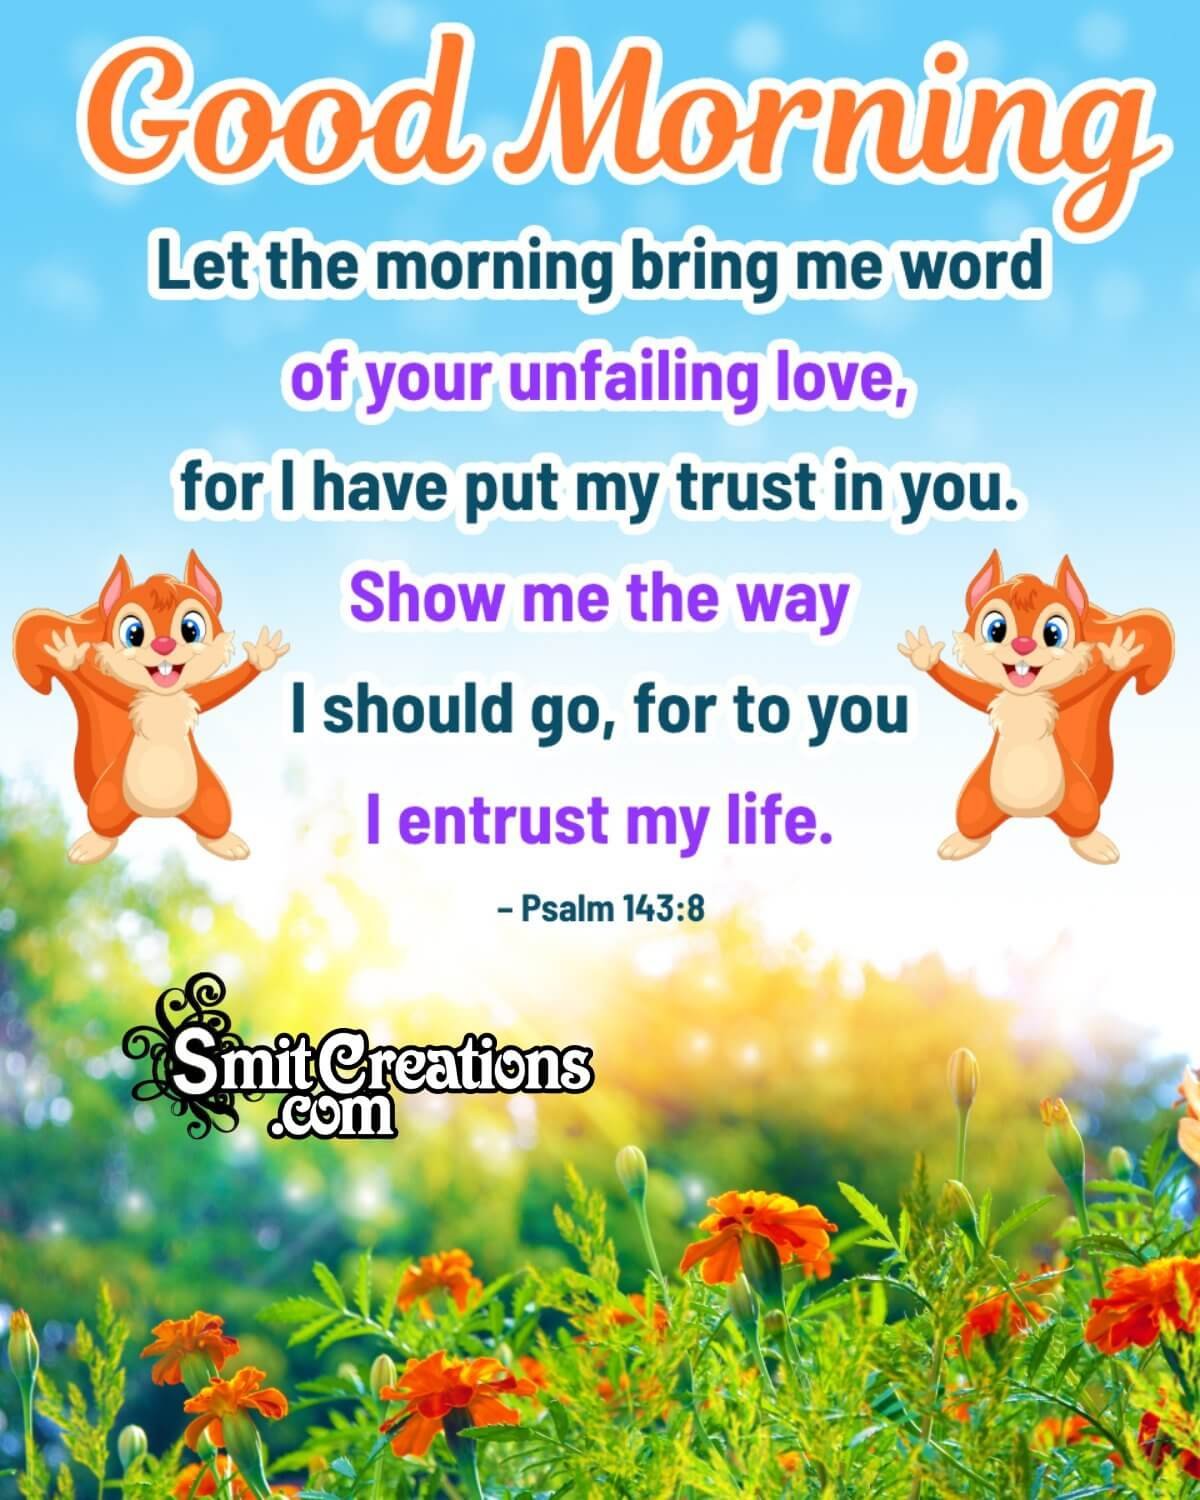 Awesome Love Good Morning Bible Verse Image